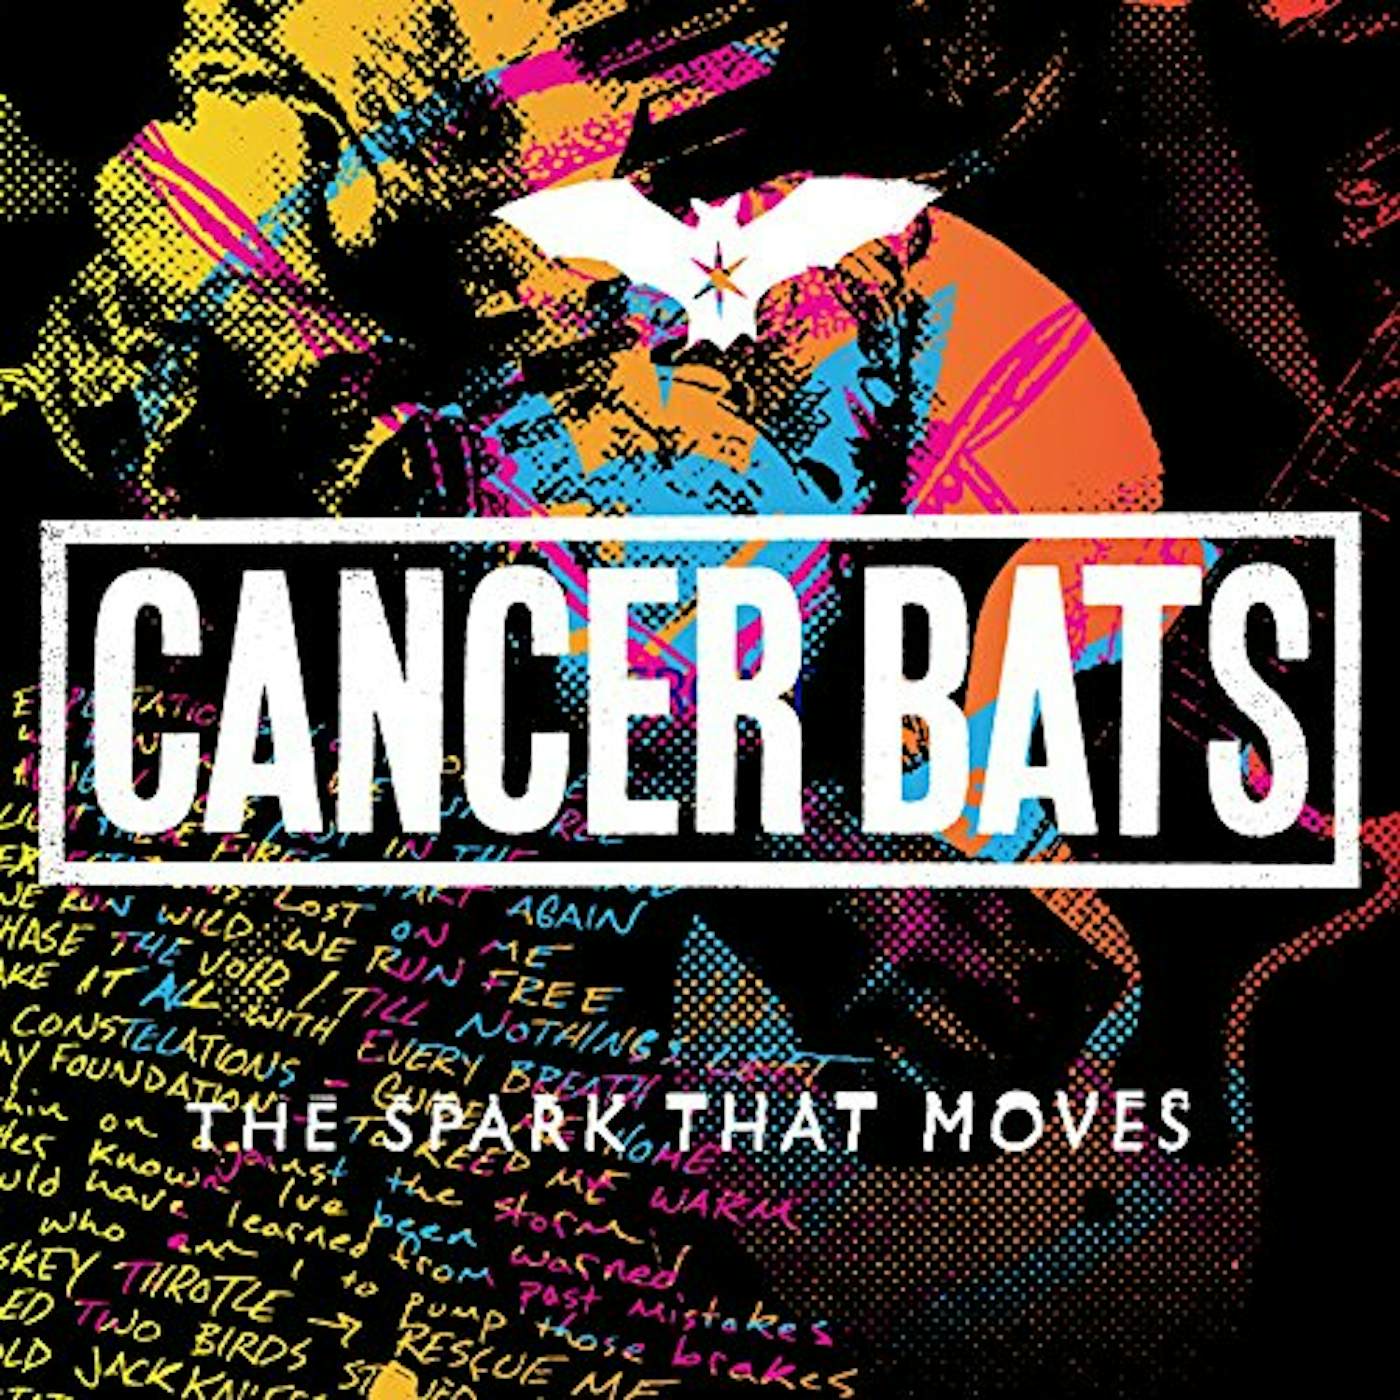 Cancer Bats SPARK THAT MOVES CD